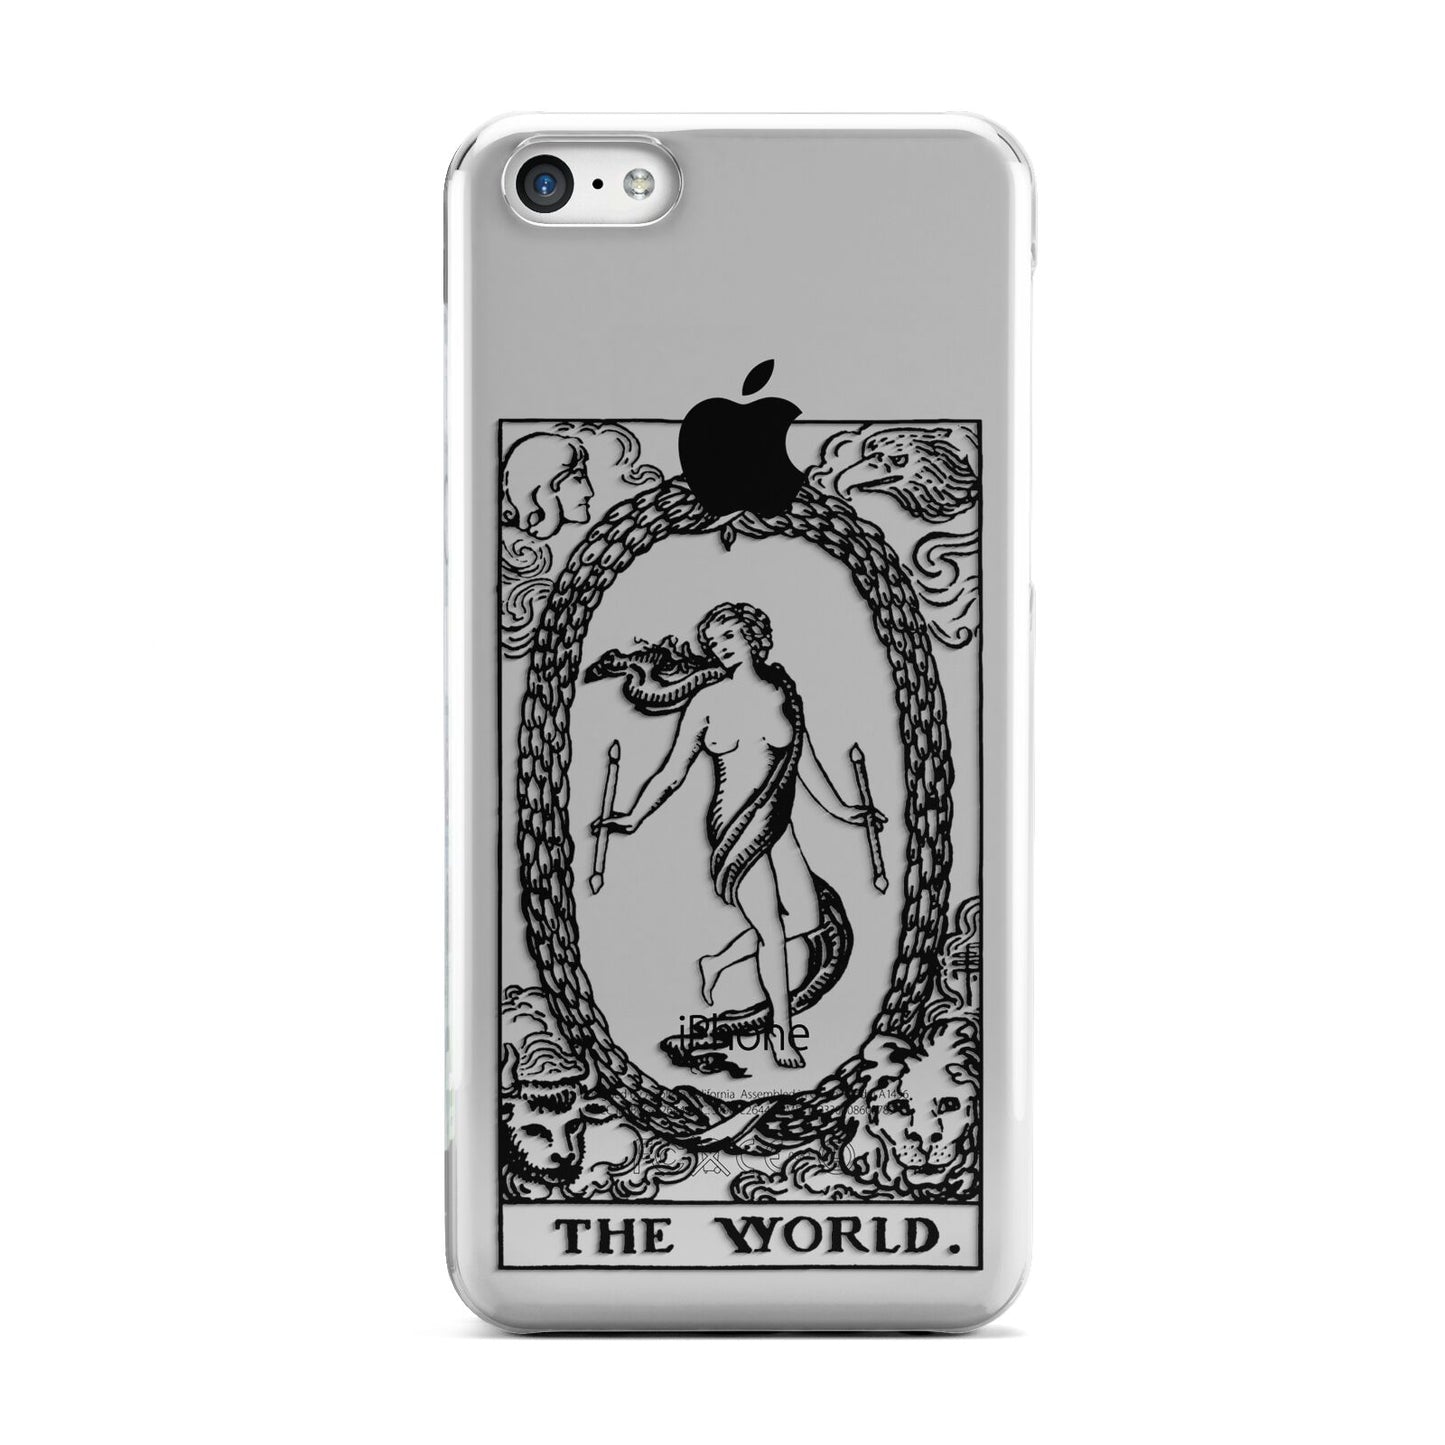 The World Monochrome Apple iPhone 5c Case